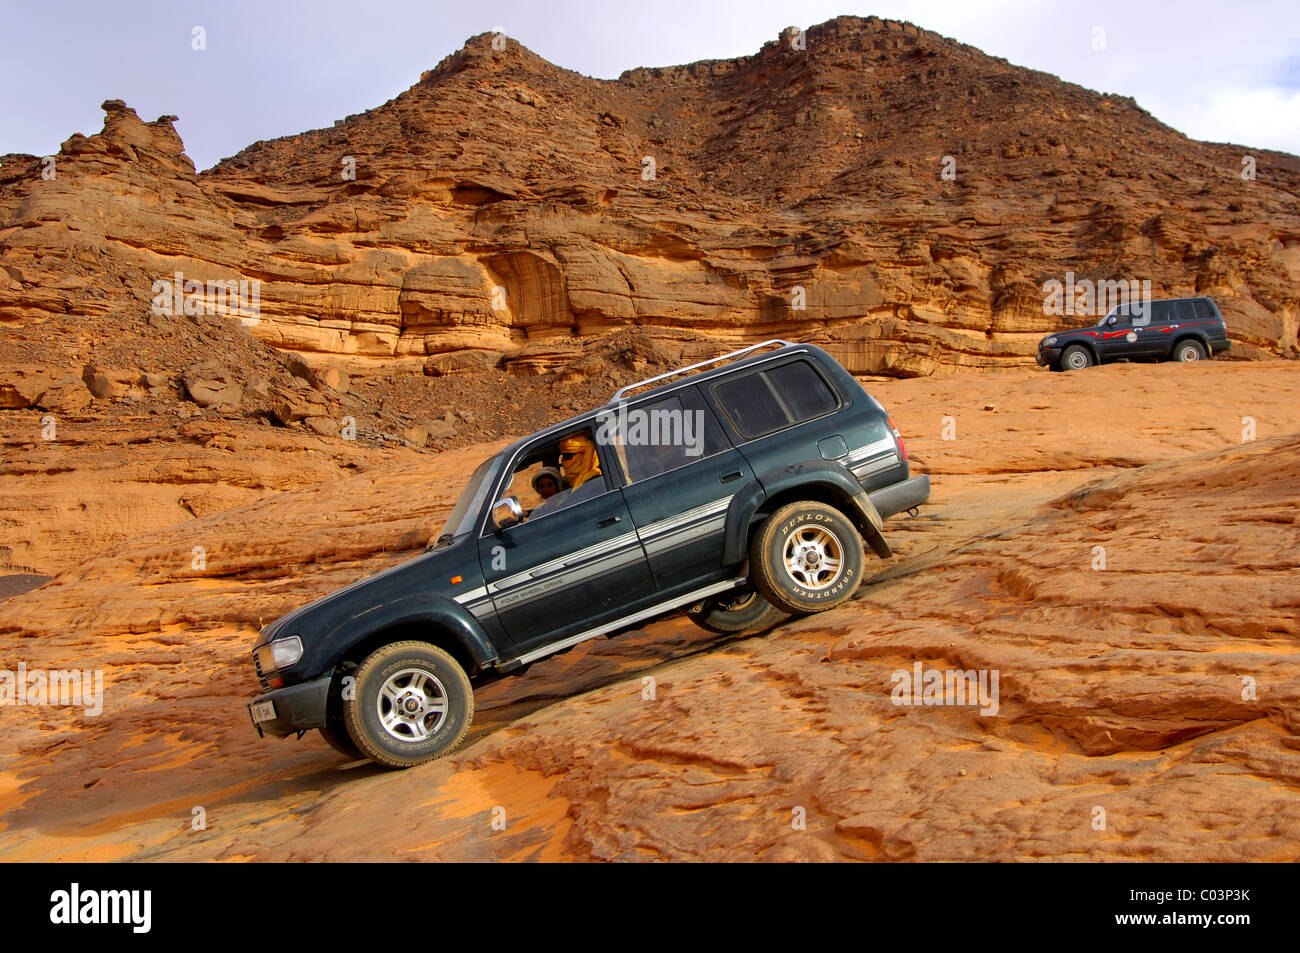 Off-road vehicle passing in a steep rock passage, Acacus Mountains, Sahara desert, Libya Stock Photo